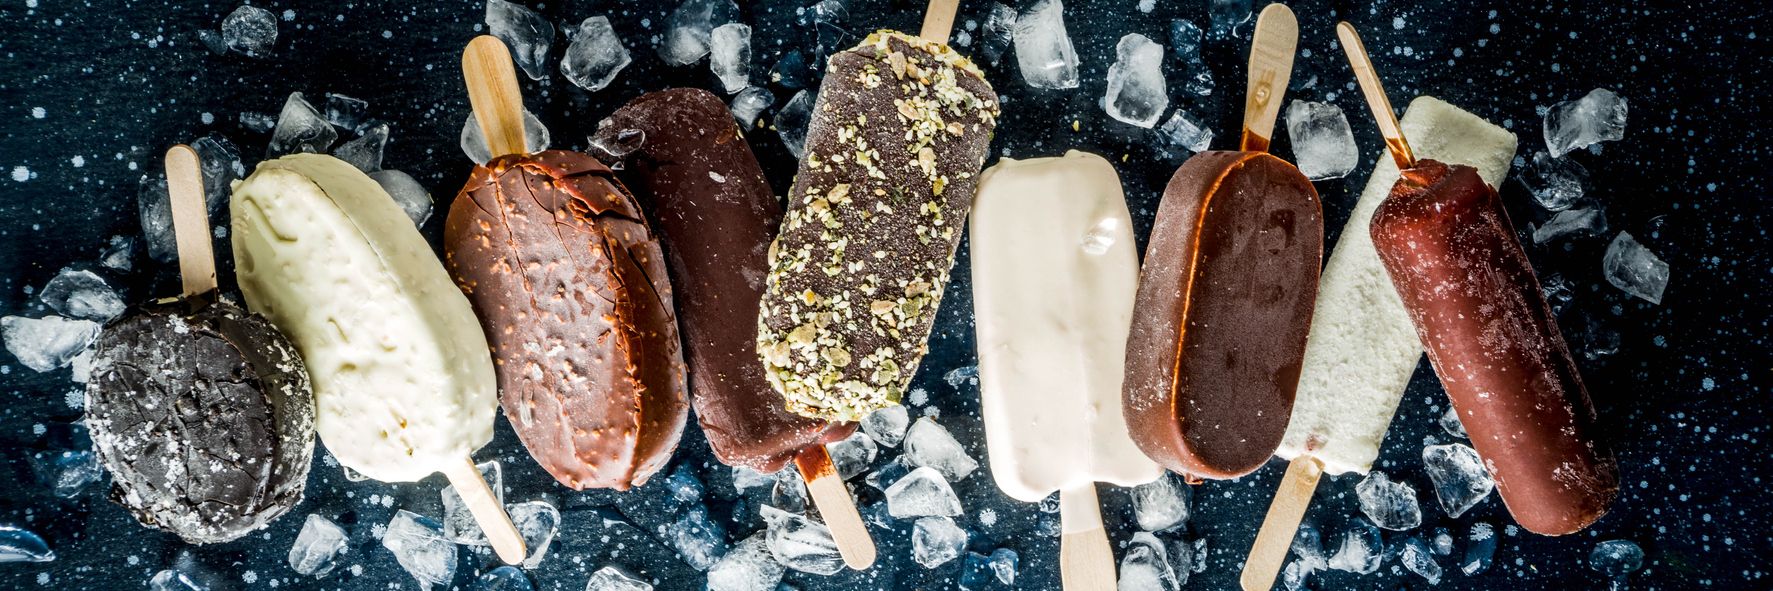 19 San Diego Spots for Indulgent Ice Cream and Tasty Frozen Treats